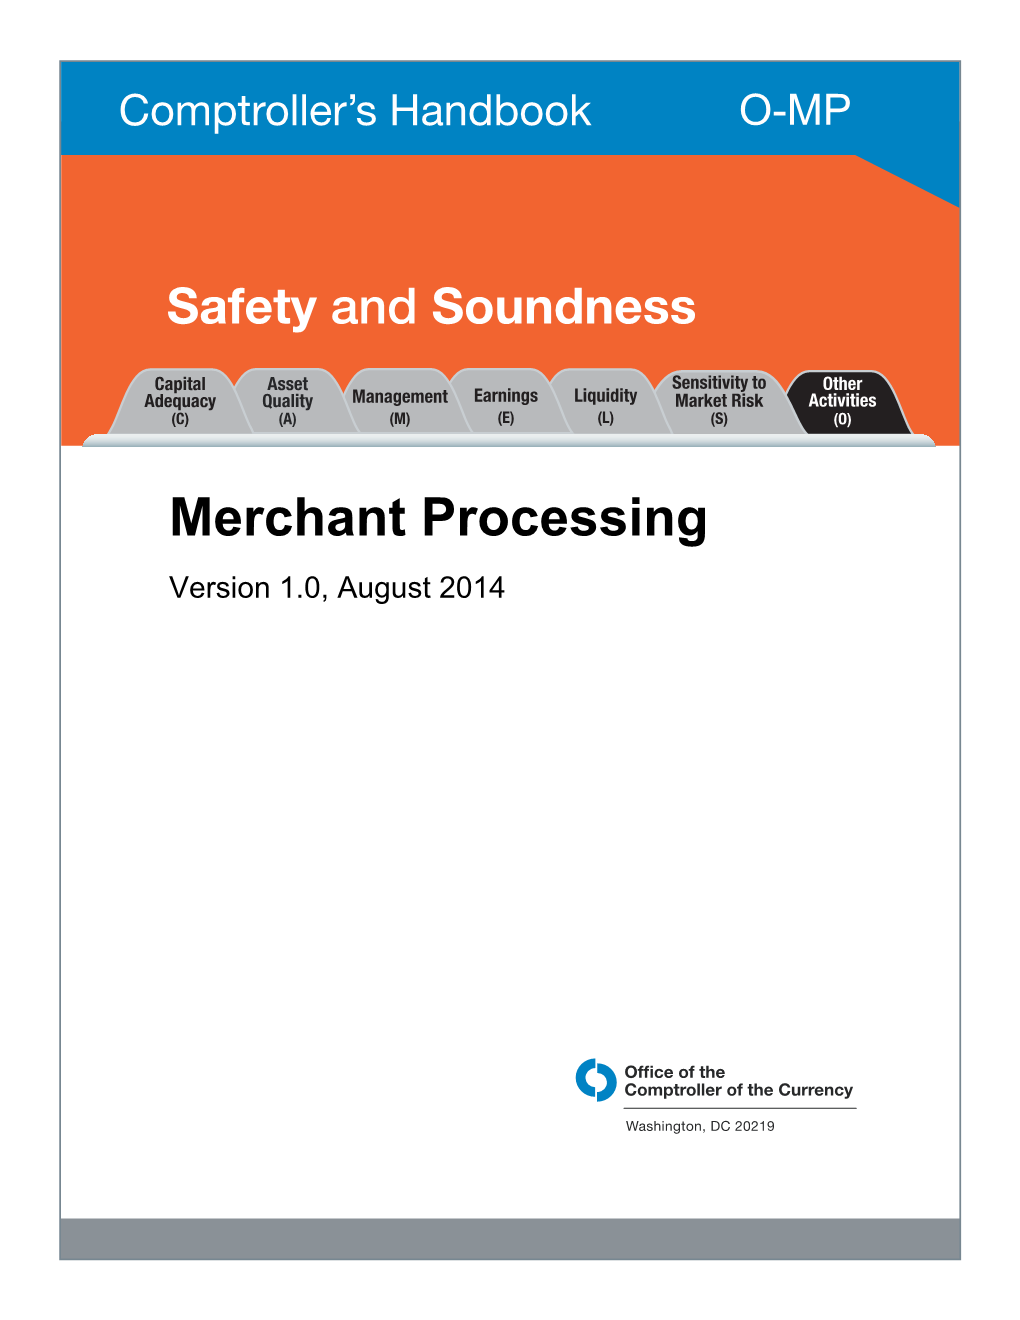 Merchant Processing Version 1.0, August 2014